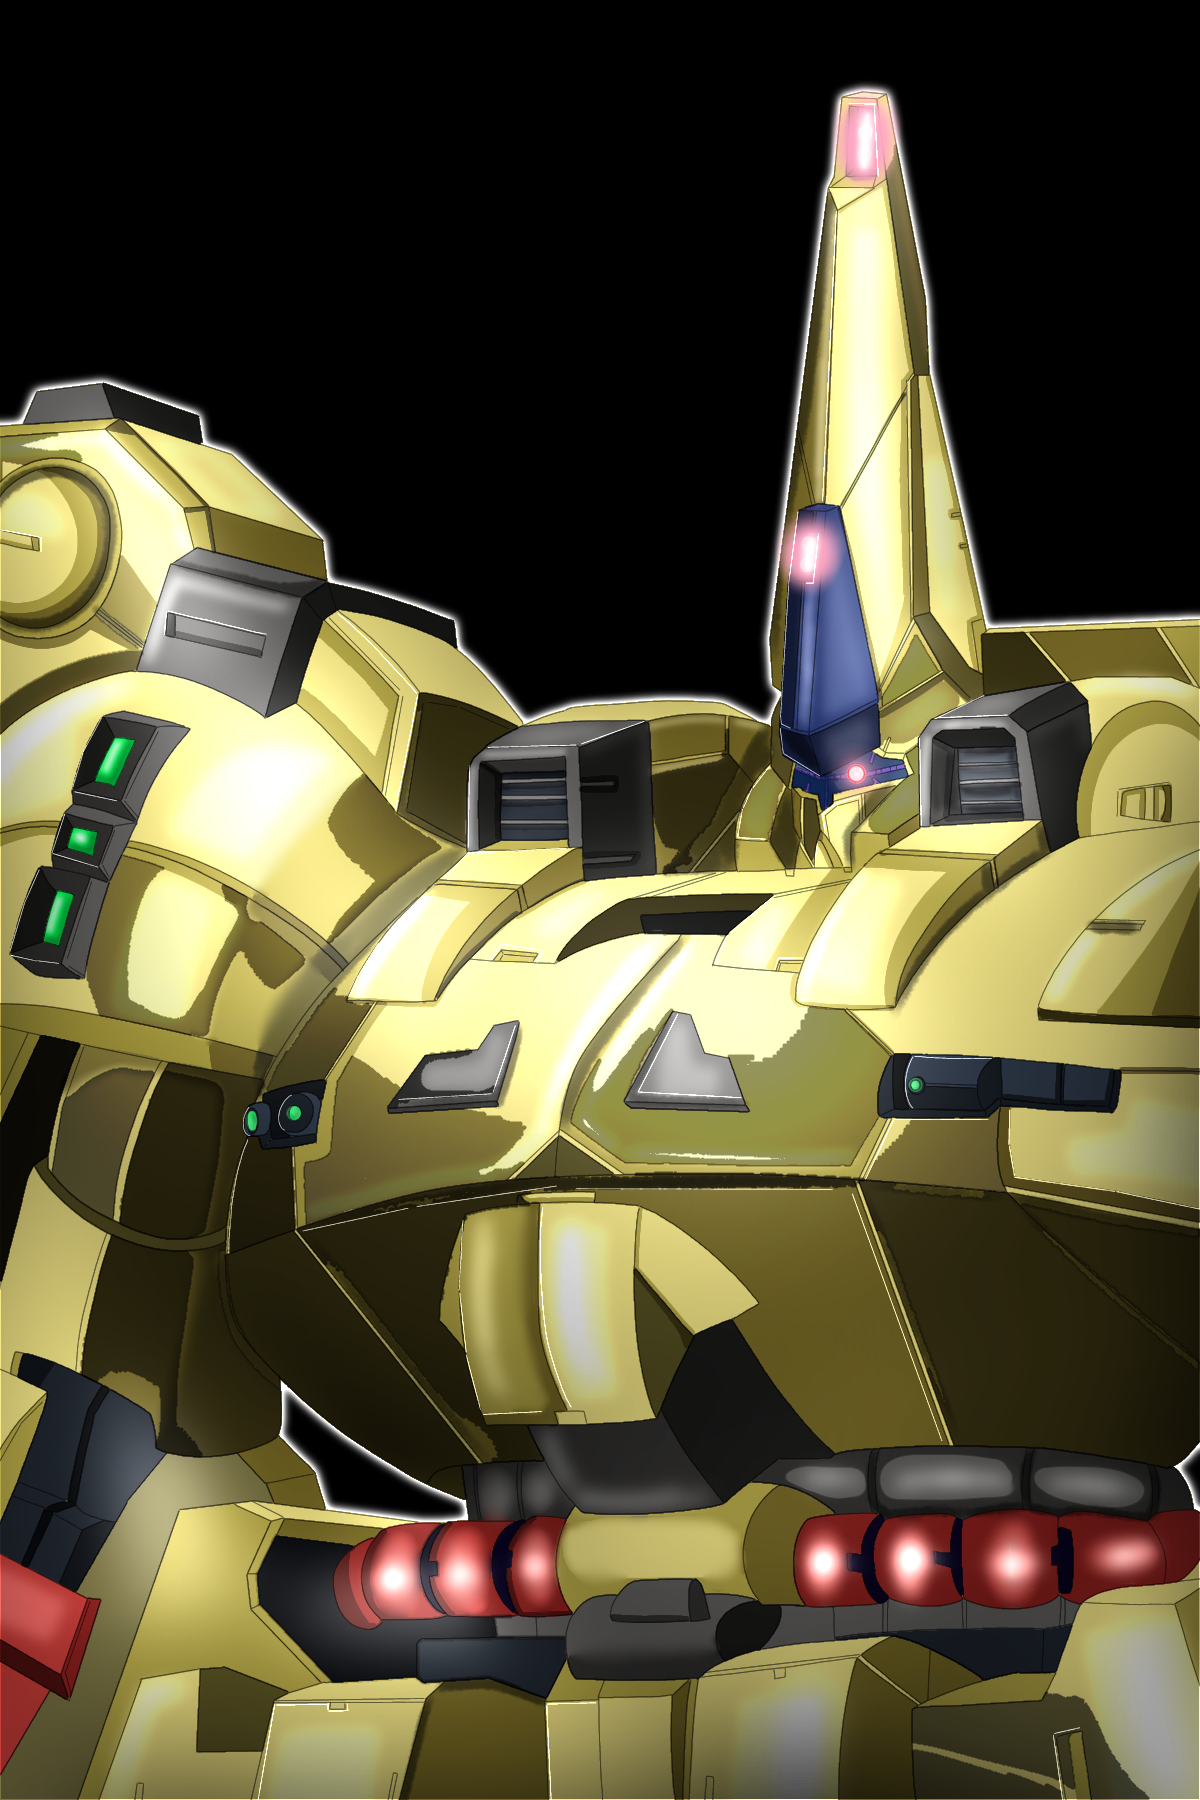 The O Mobile Suit Zeta Gundam Mobile Suit Anime Mechs Super Robot Taisen Artwork Digital Art Fan Art 1200x1800